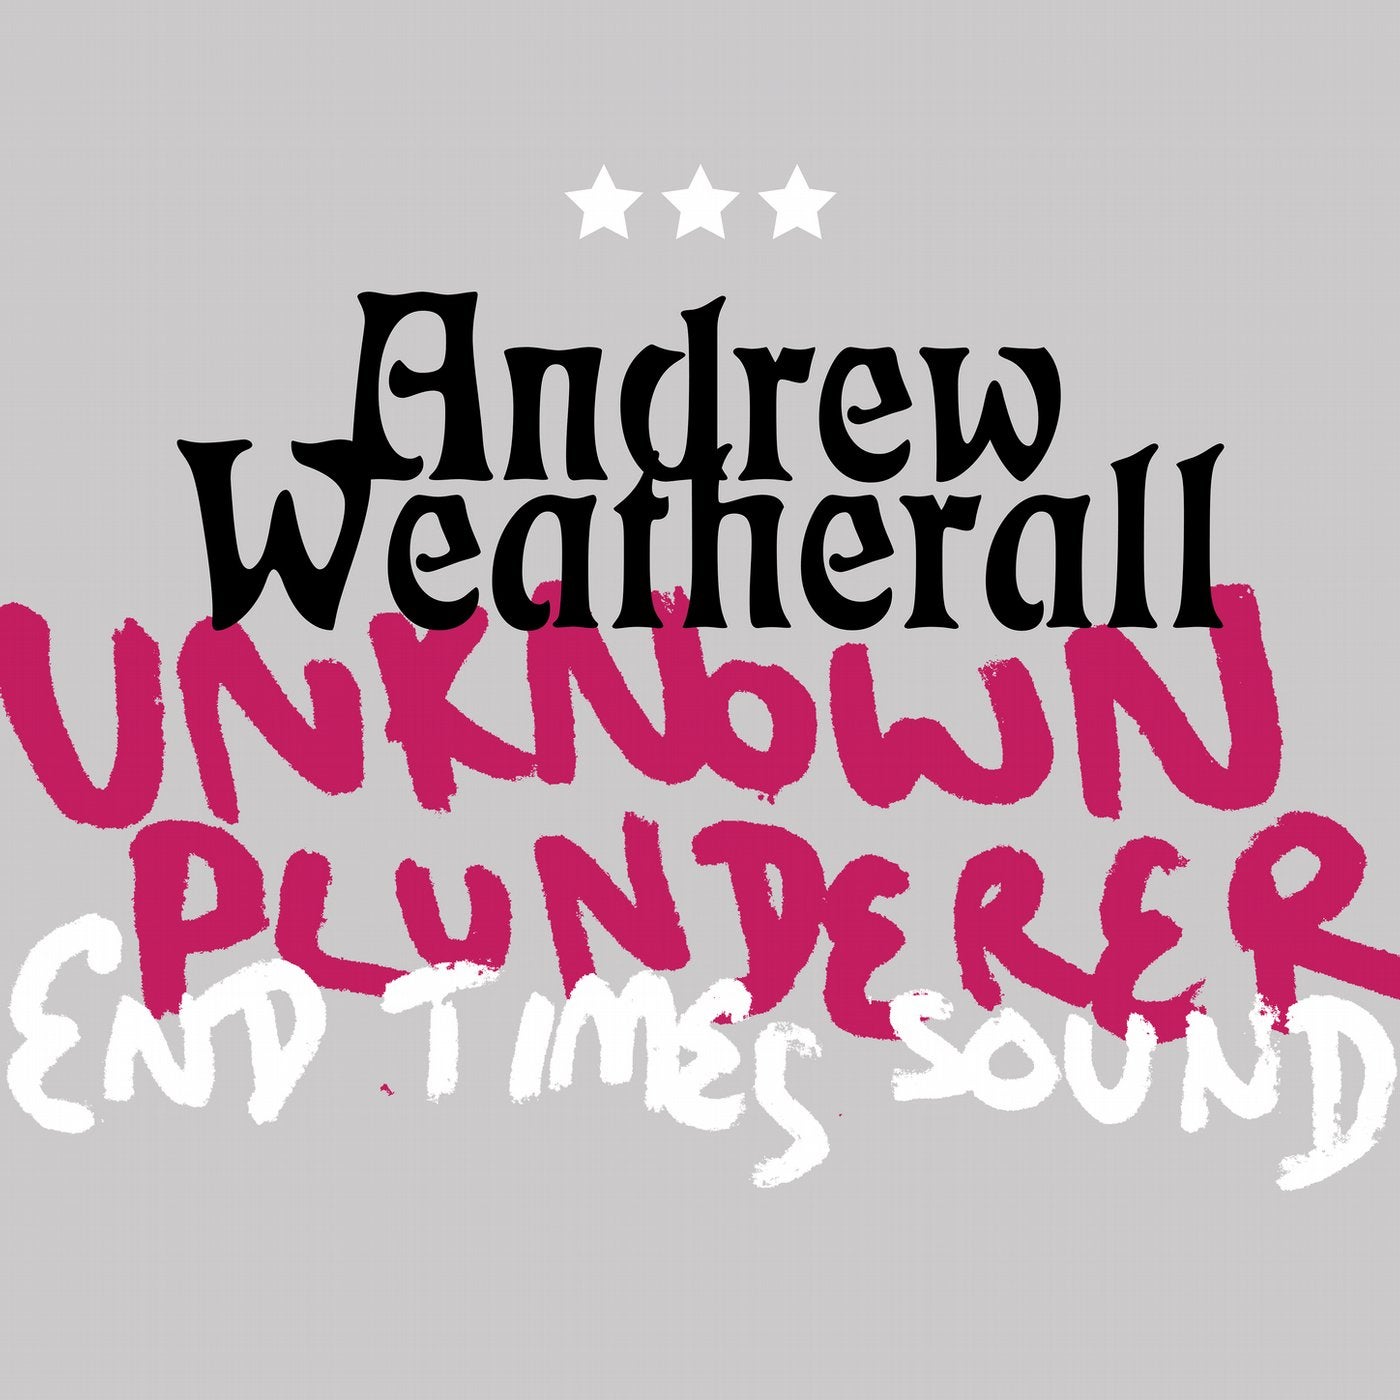 Andrew Weatherall music download - Beatport